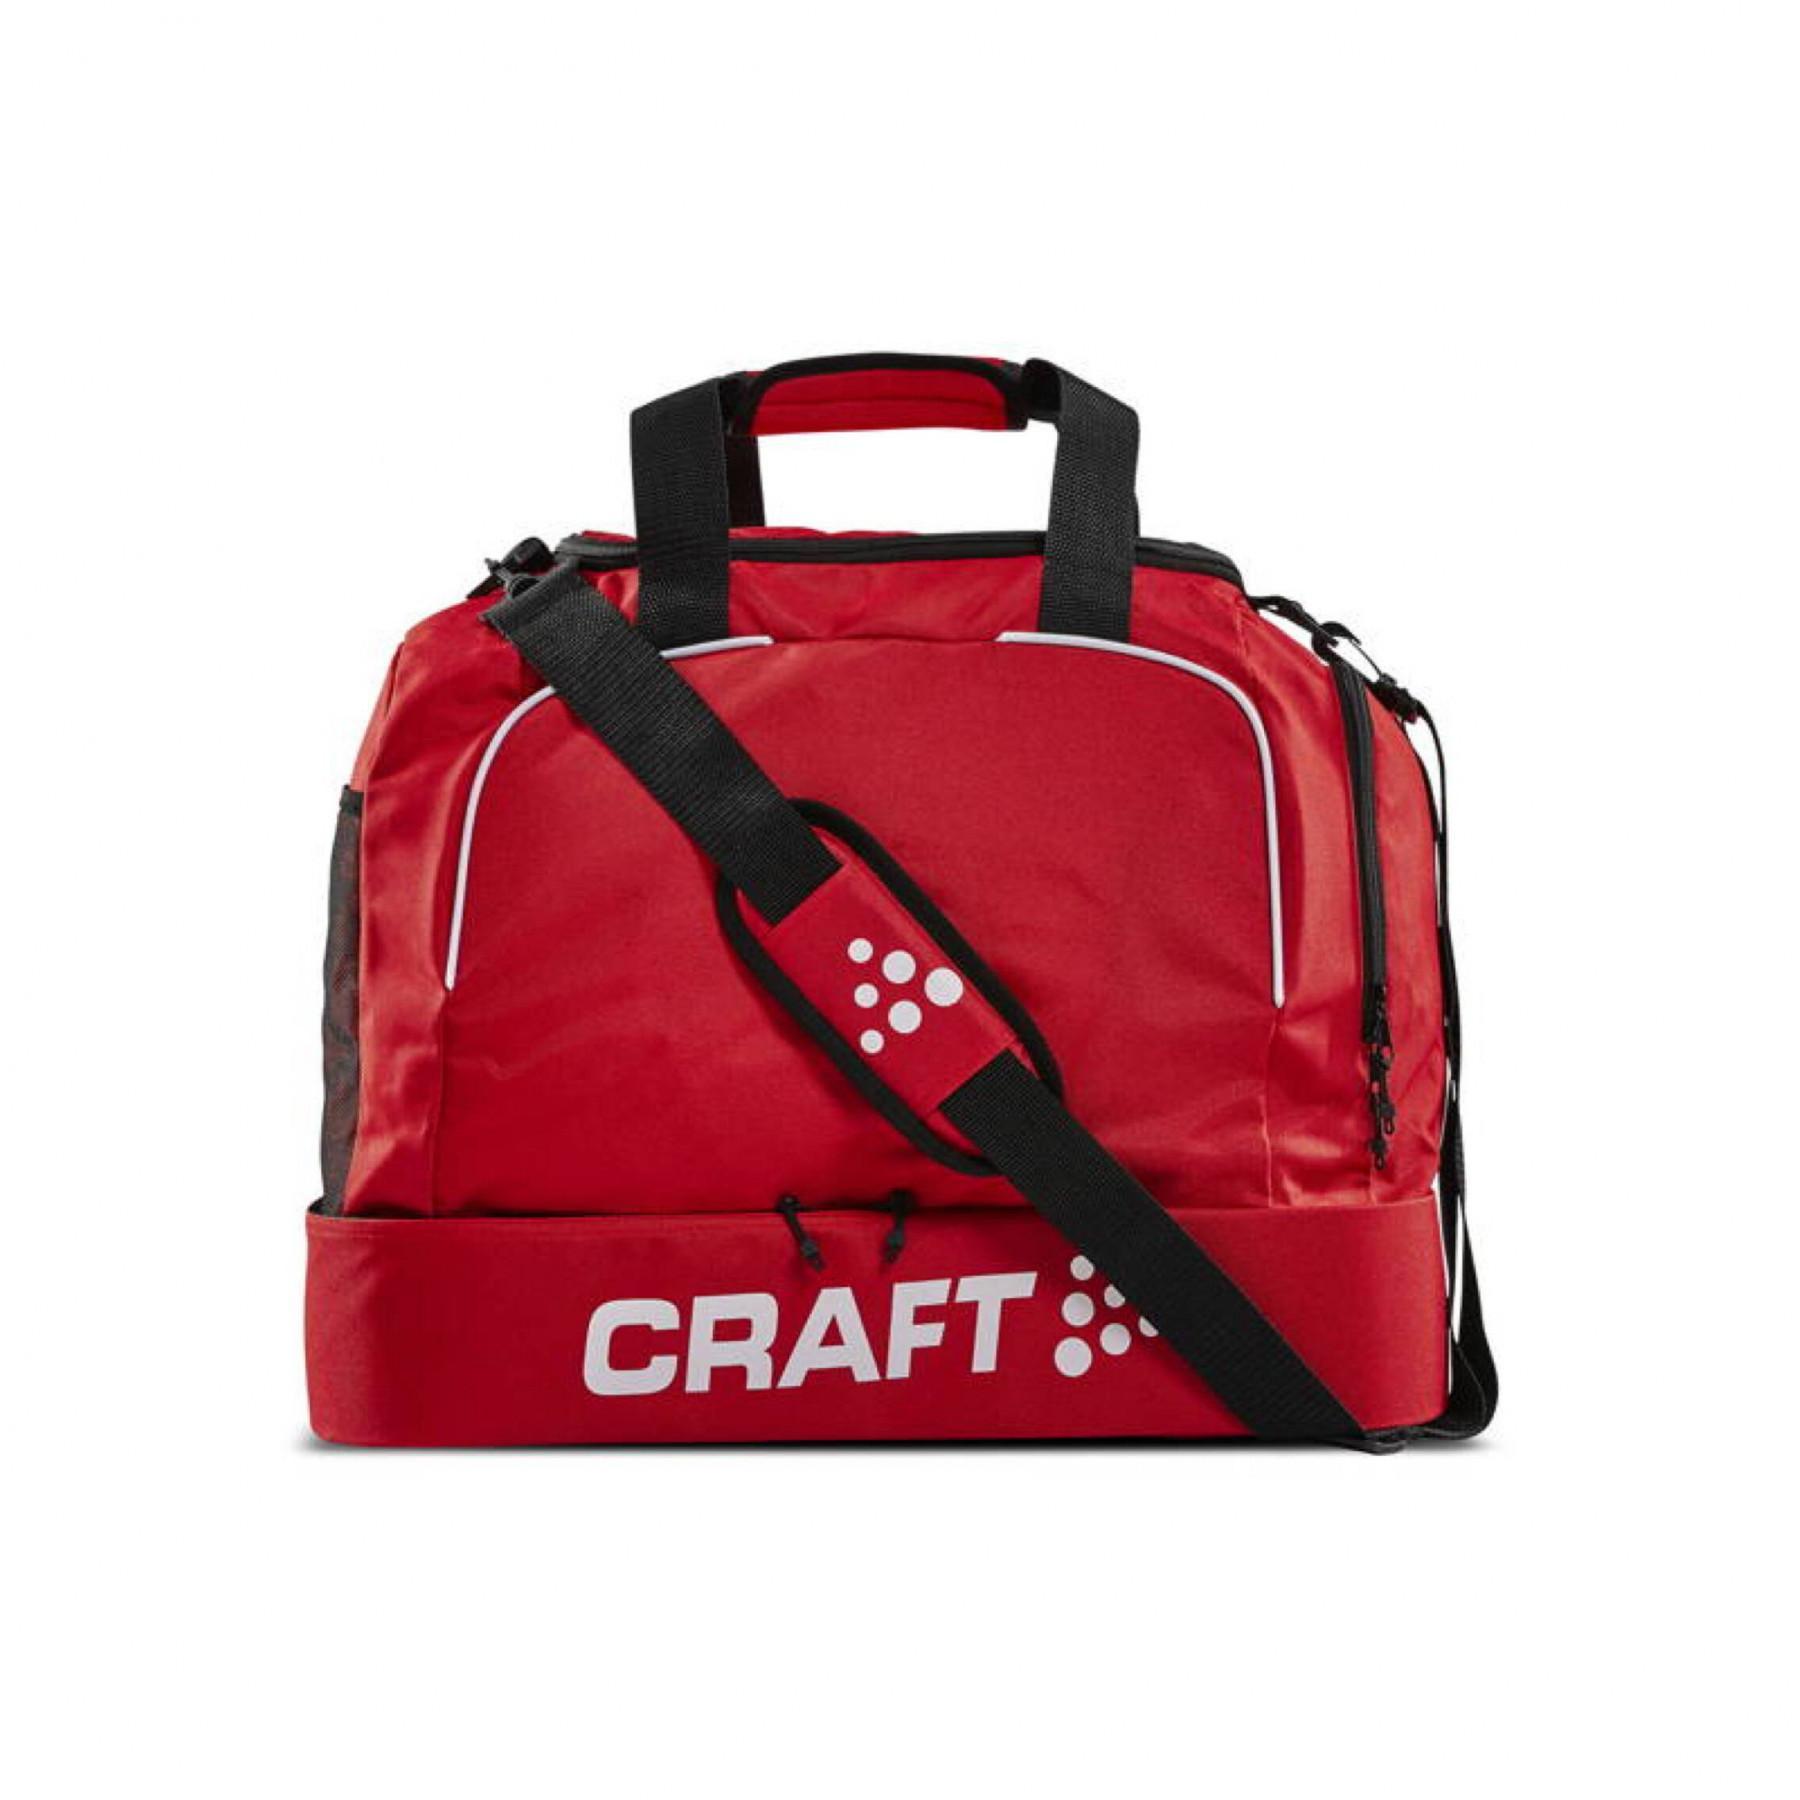 Väska Craft pro control small